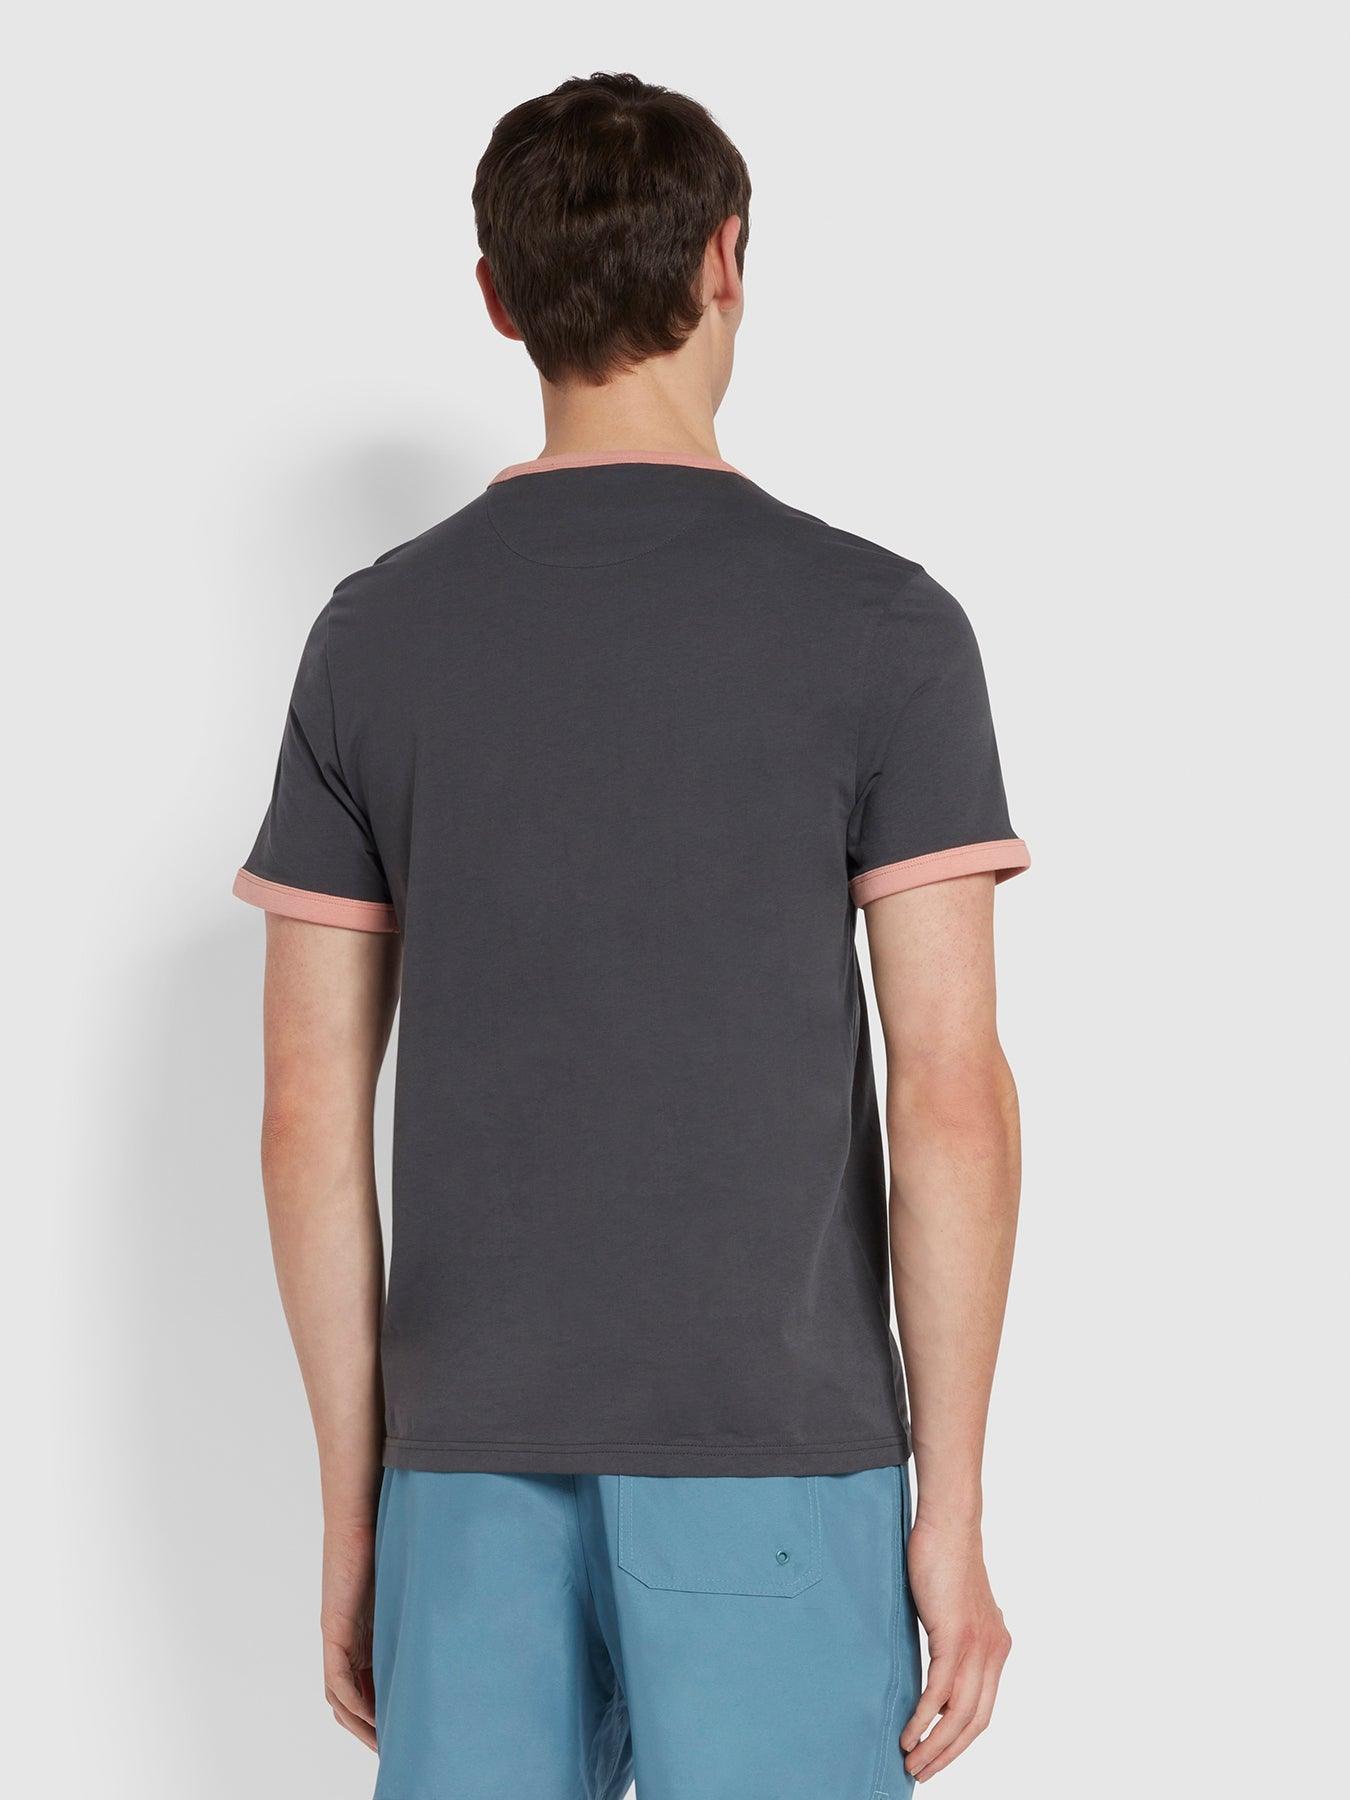 Camiseta Groves de corte ajustado con ribete de algodón orgánico Farah Grey - ECRU